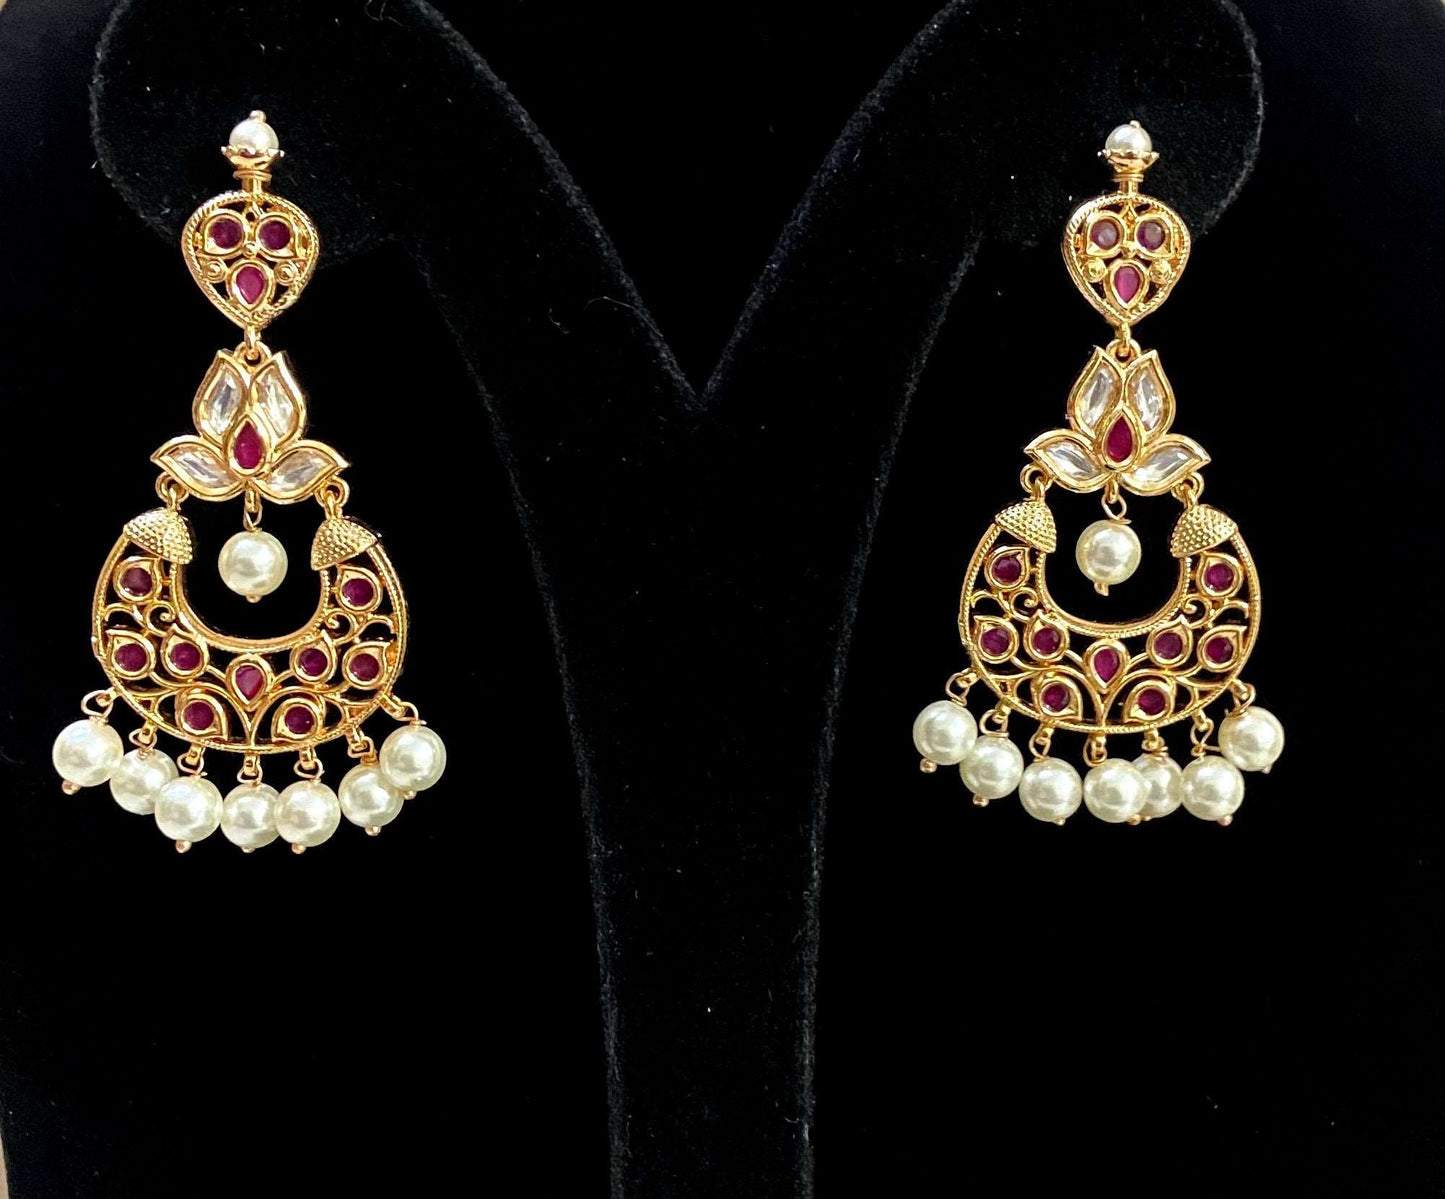 Kundan chandbali earrings